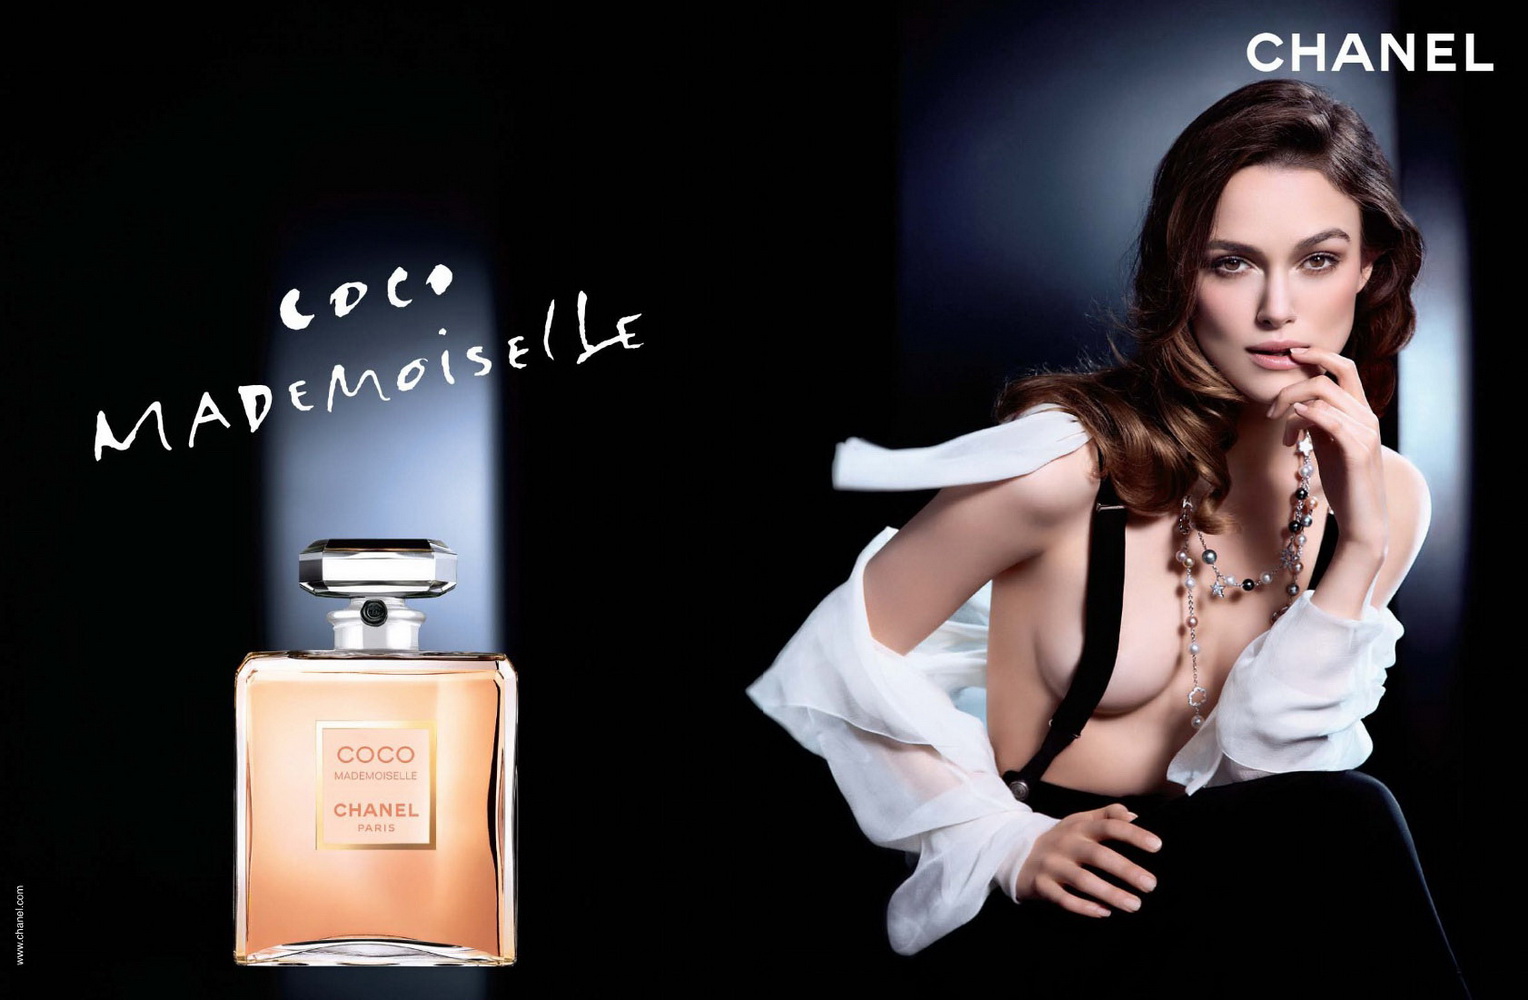 Chanel-Coco-Mademoiselle-Parfum reklam afişi Keira Knightley manken commercial.jpg